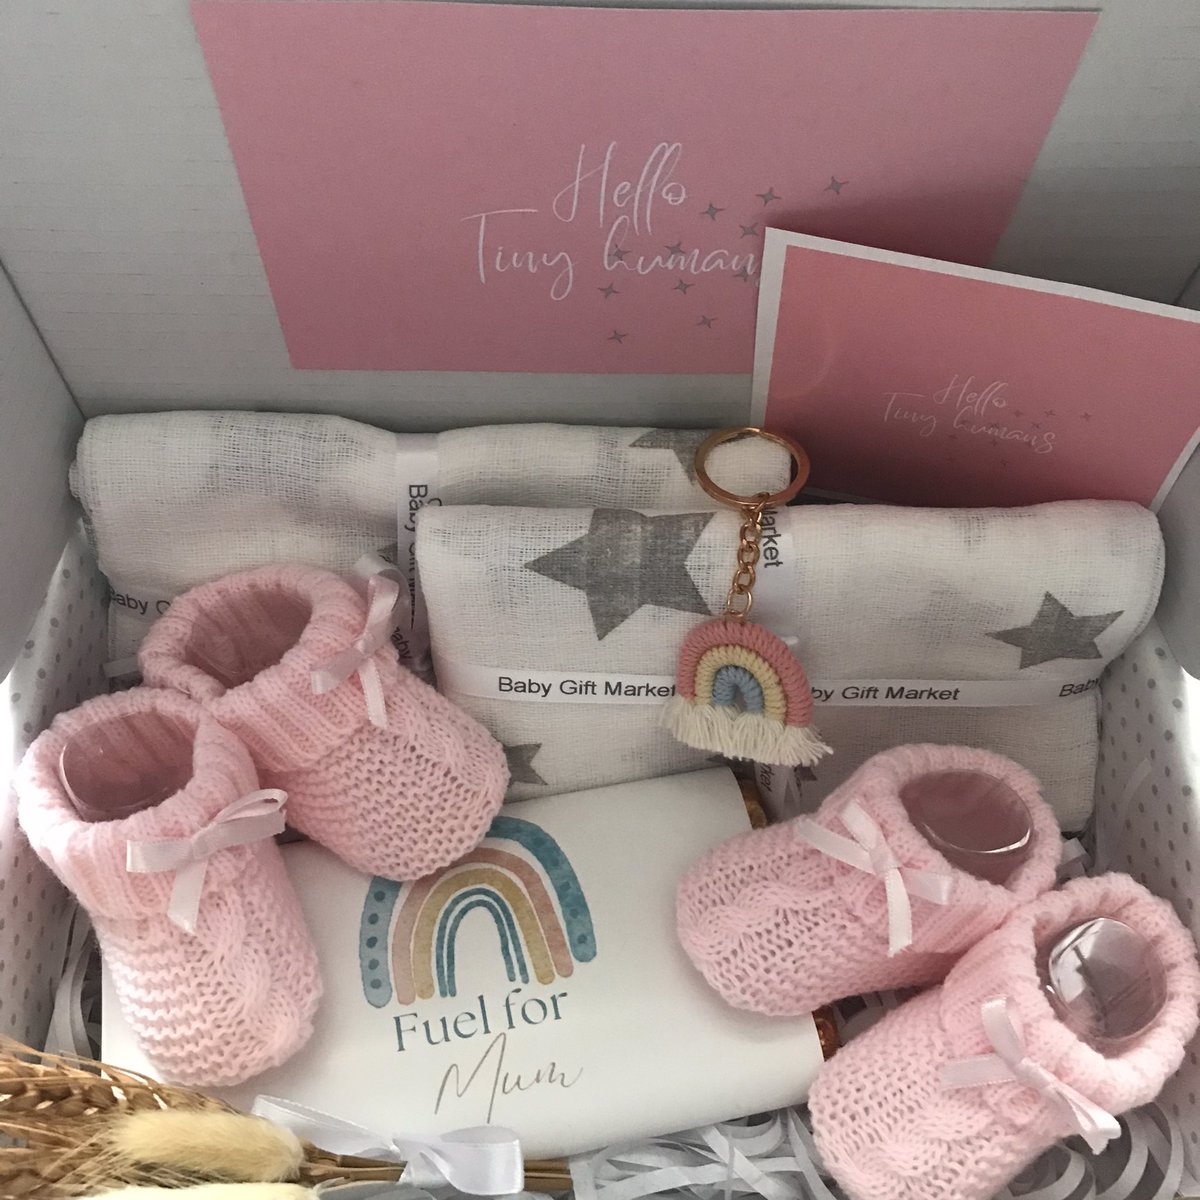 Twin gift- Twin girls- Twin baby shower gift 💗💗👶🏻👶🏻 babygiftmarket.etsy.com/listing/153754… #craftbizparty #Earlybiz